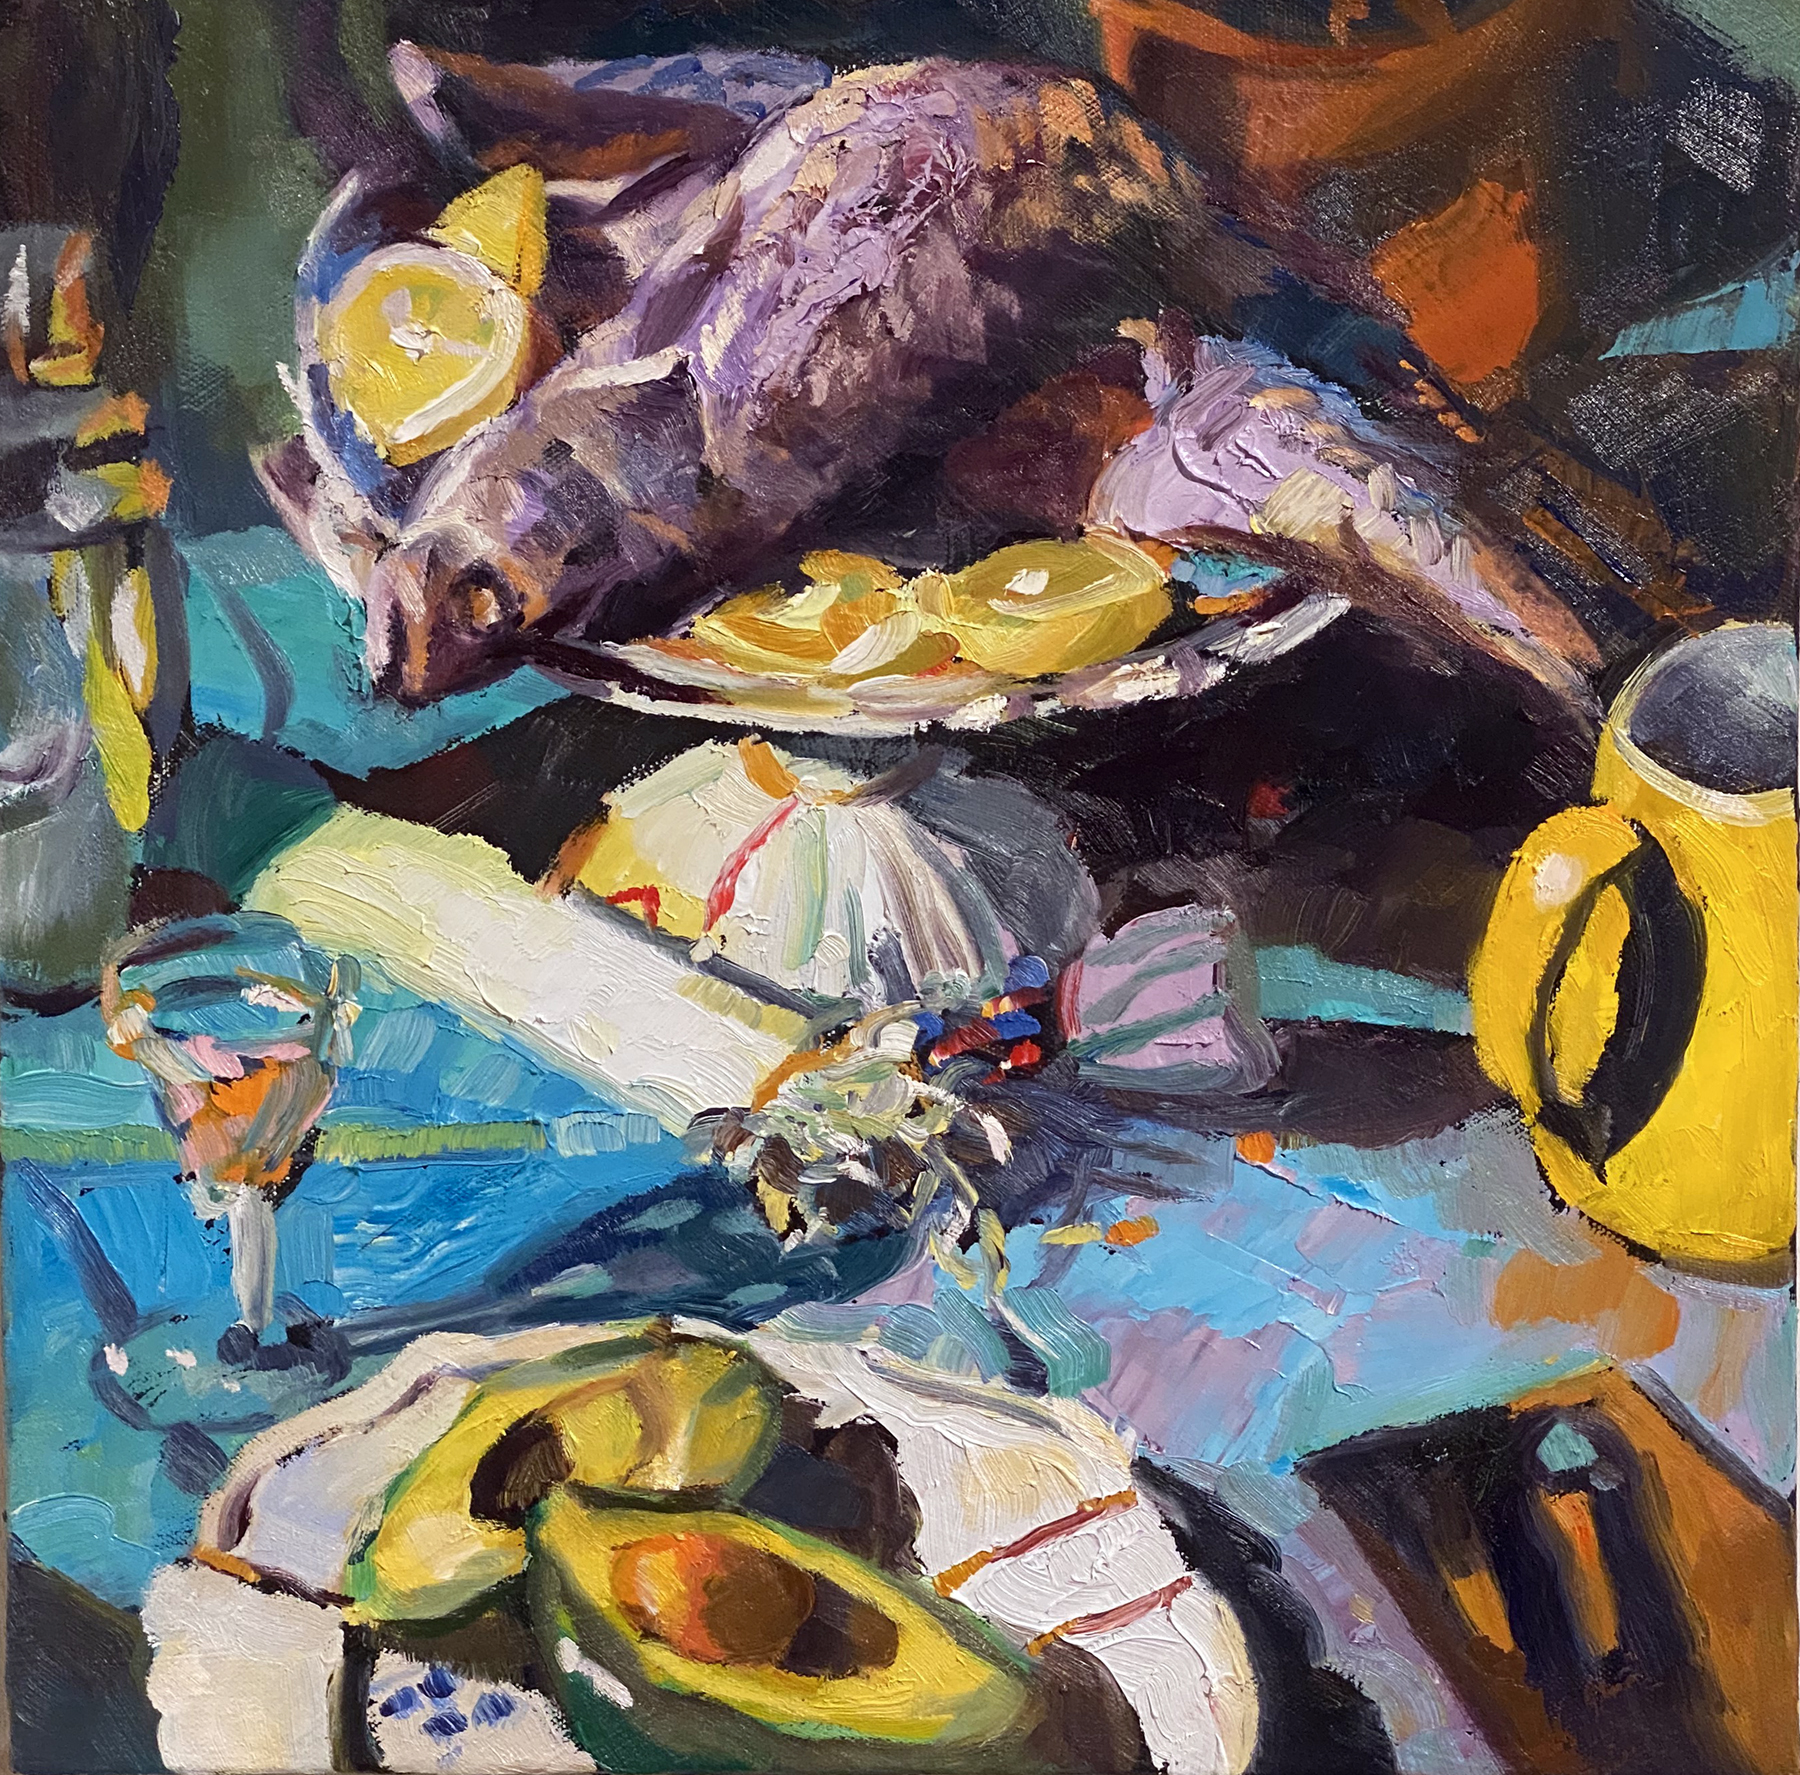 Rosemary Valadon 'Summer Days (Fish 2)' oil on canvas 40 x 40cm